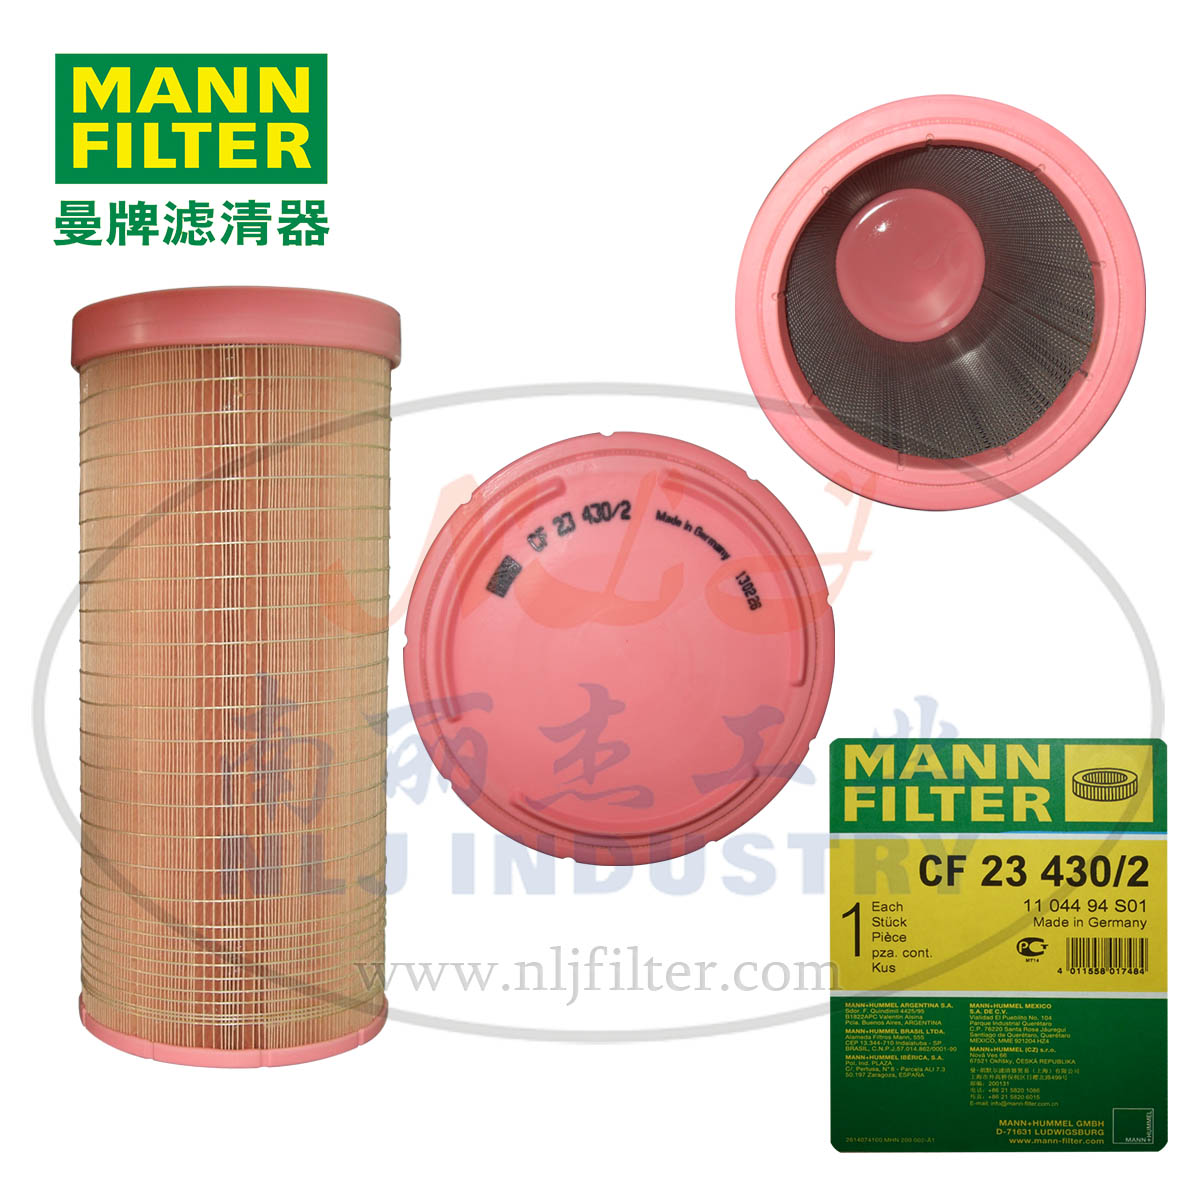 MANN-FILTER曼牌滤清器空气滤芯CF23430/2图片